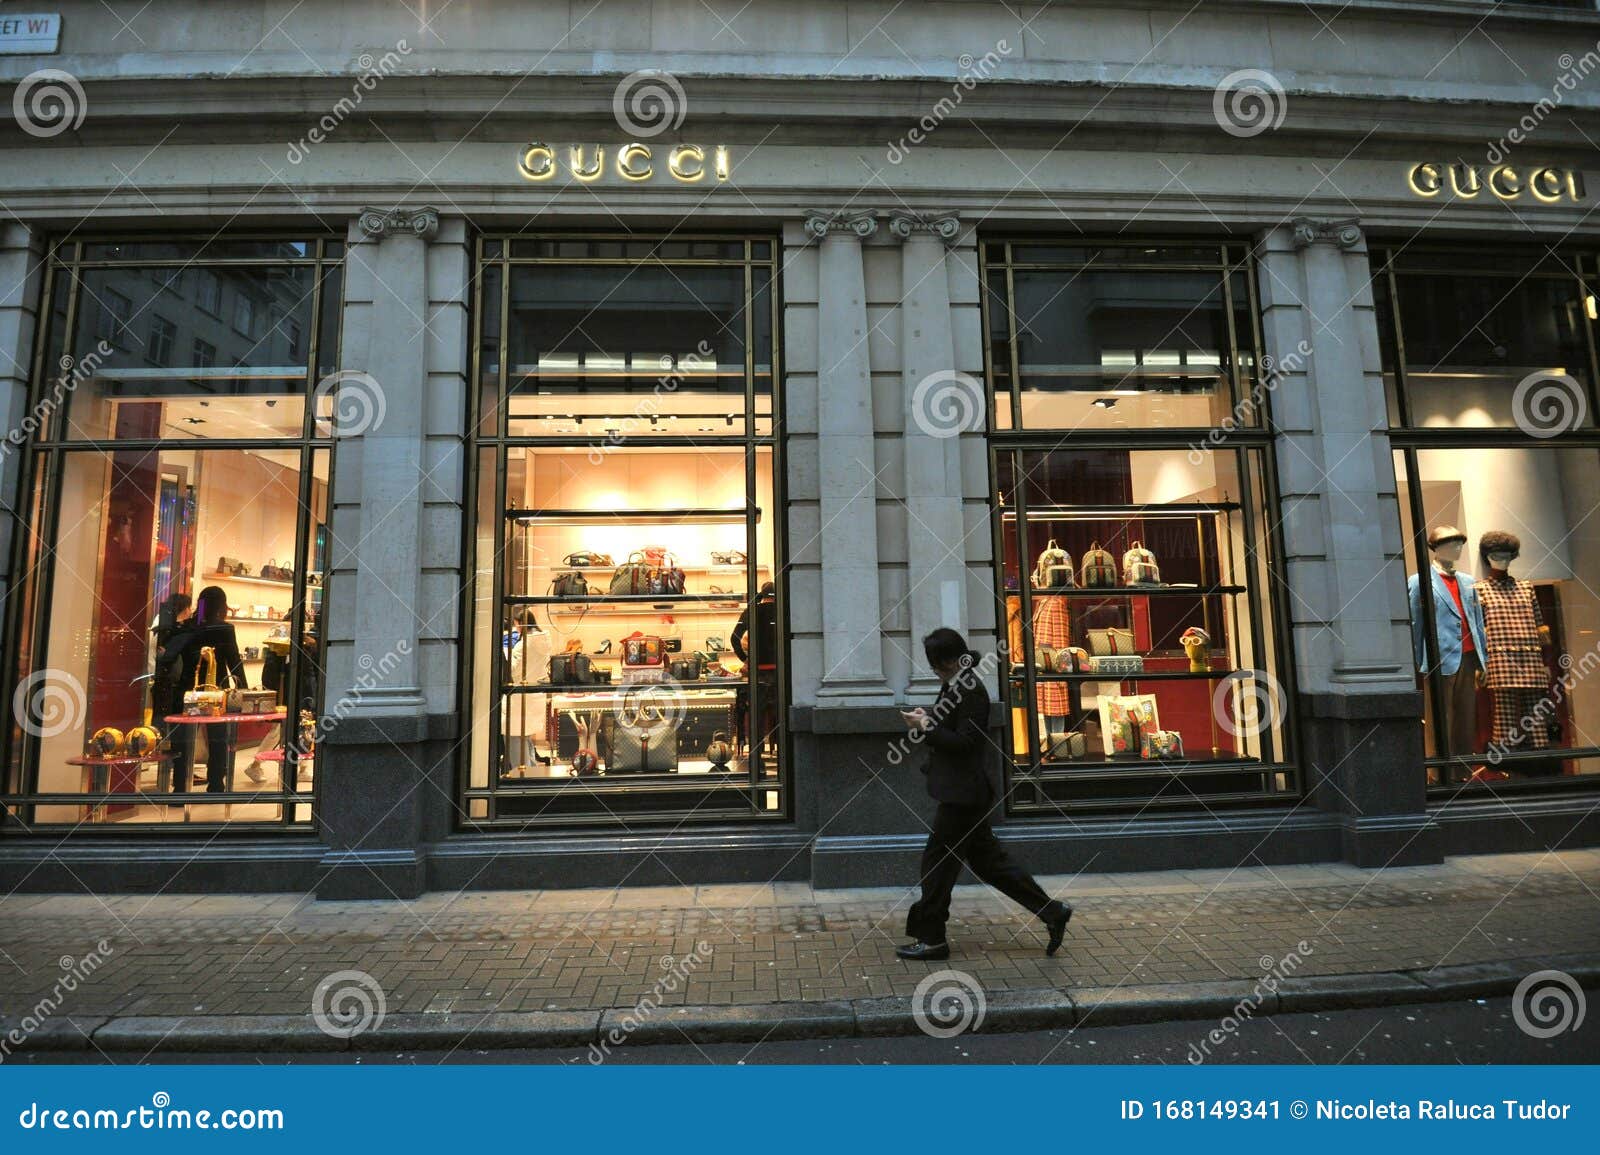 Beschietingen Gestreept Overleven Gucci High Fashion Store in Bond Street London, England Editorial Photo -  Image of building, female: 168149341